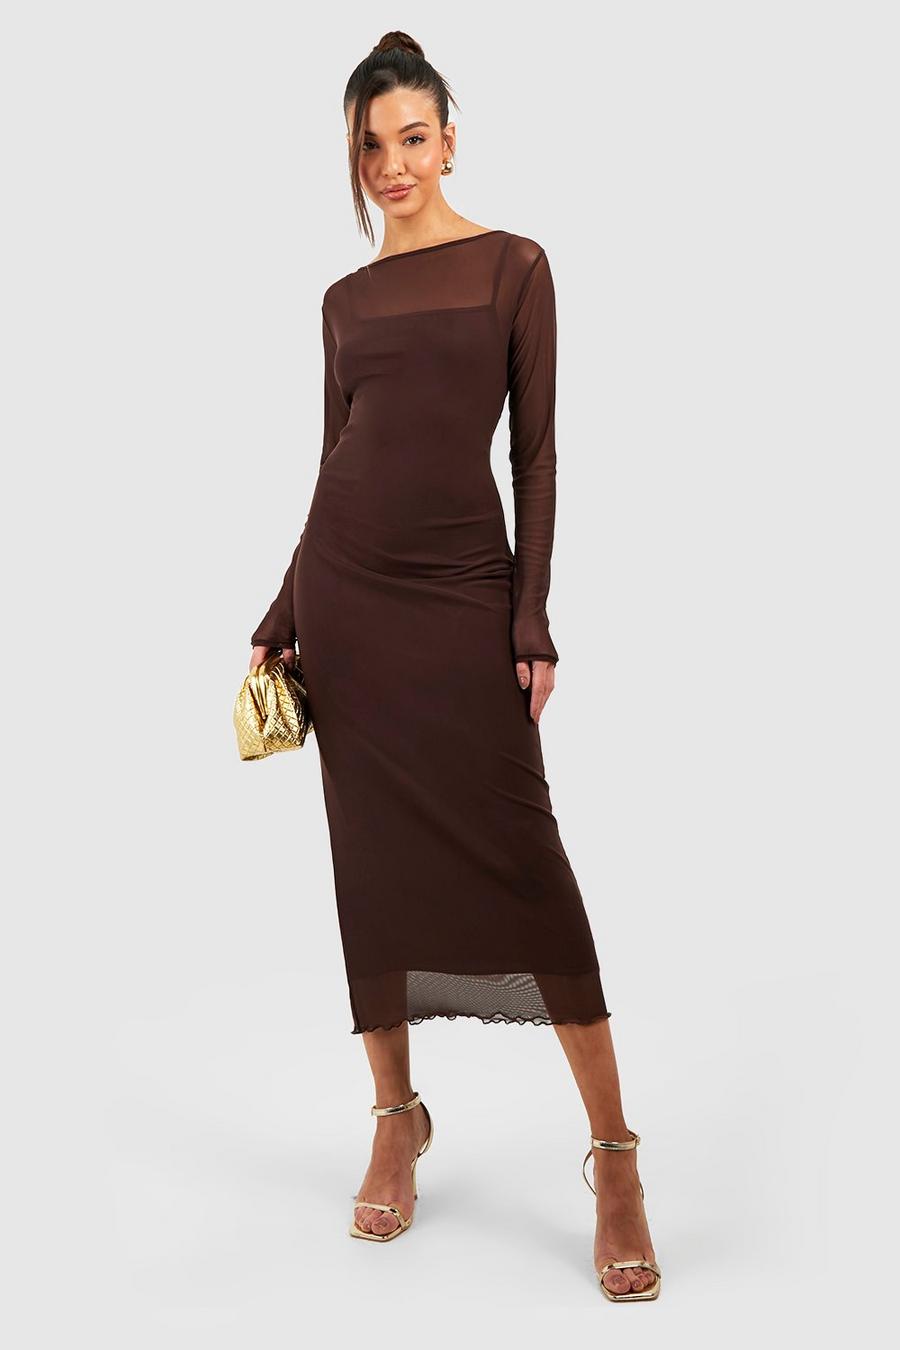 Women's Sheer Mesh Contrast Midaxi Dress